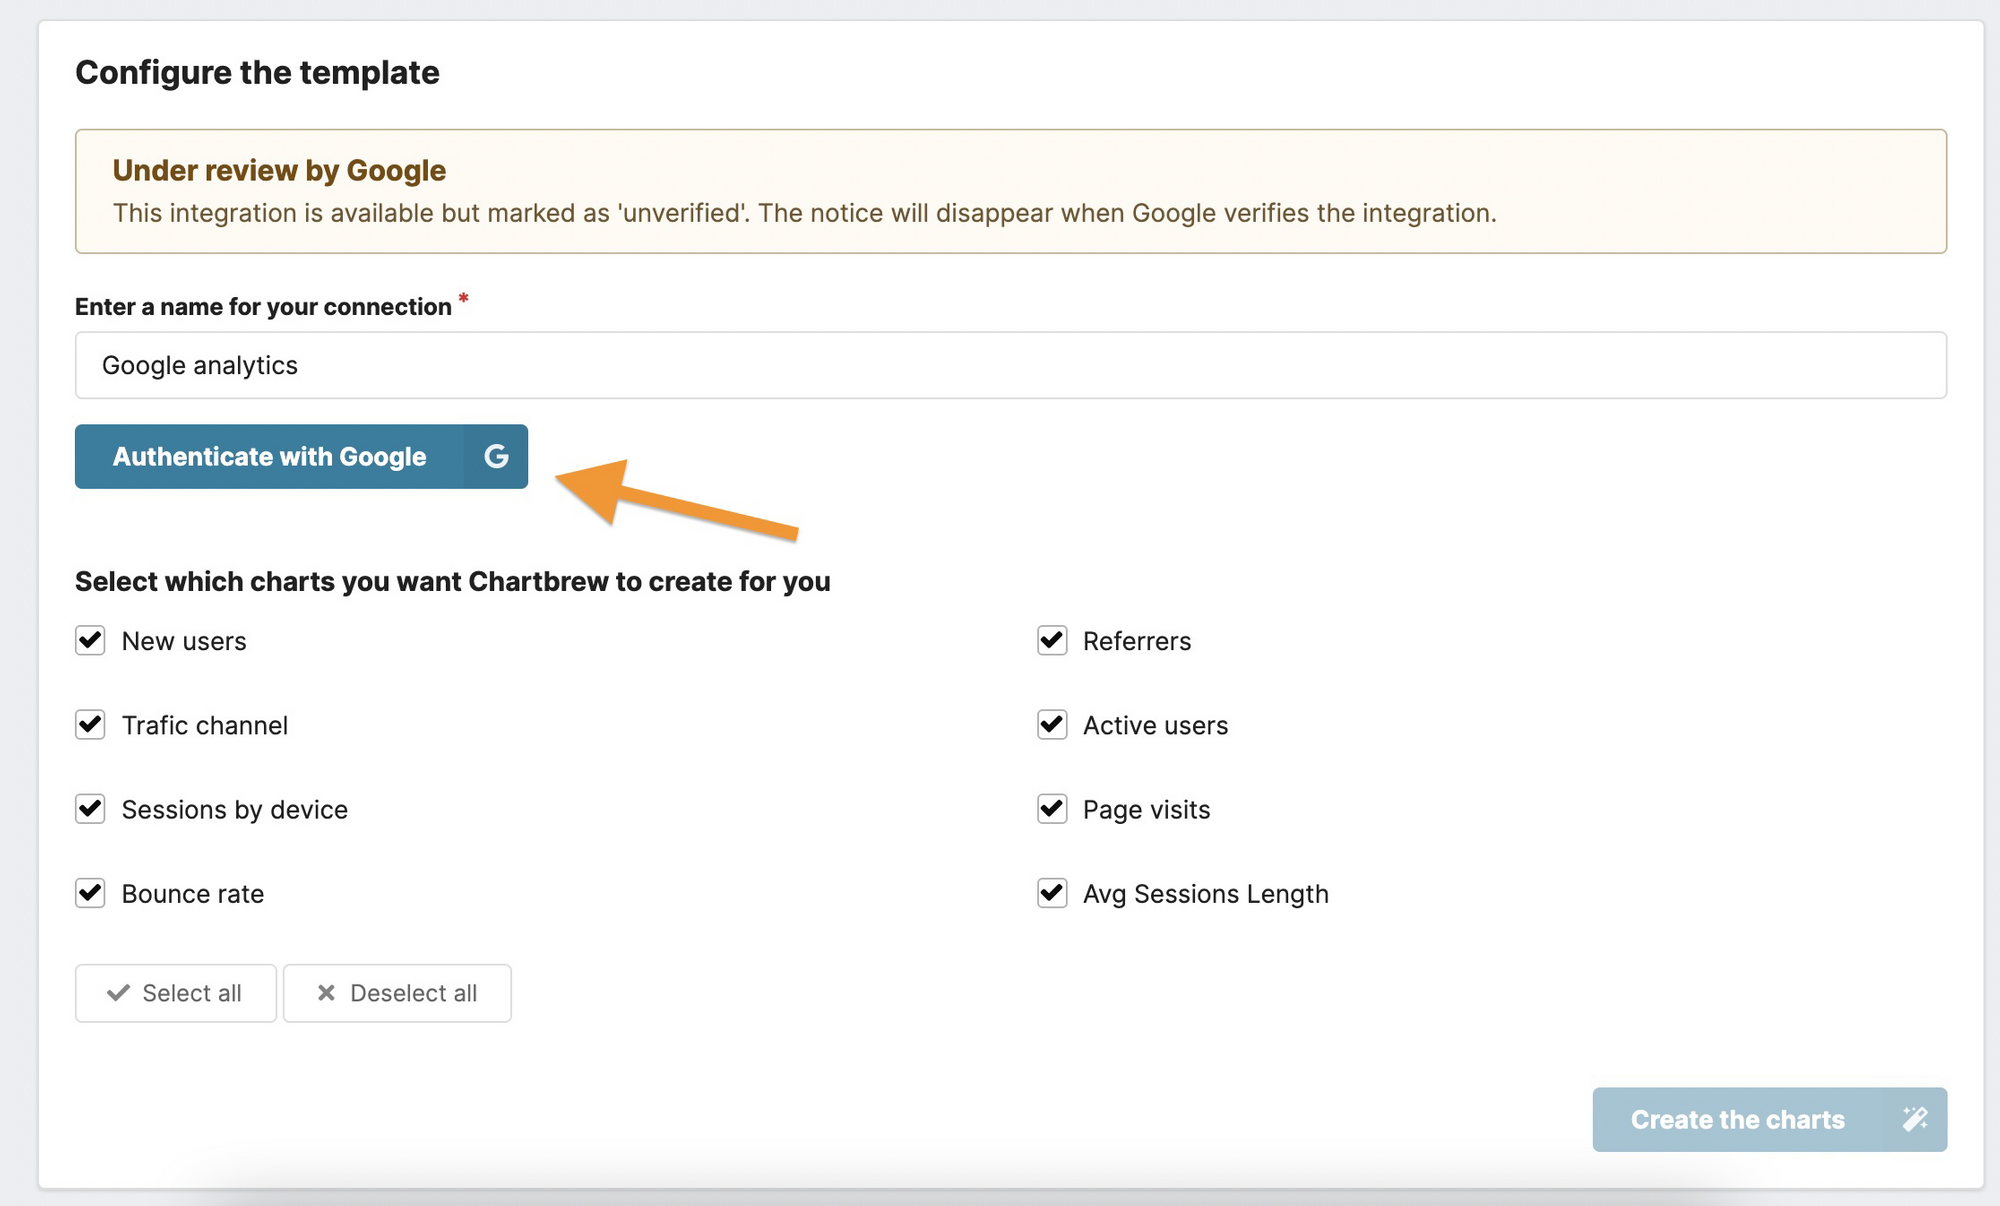 Authenticating Google Analytics with Chartbrew